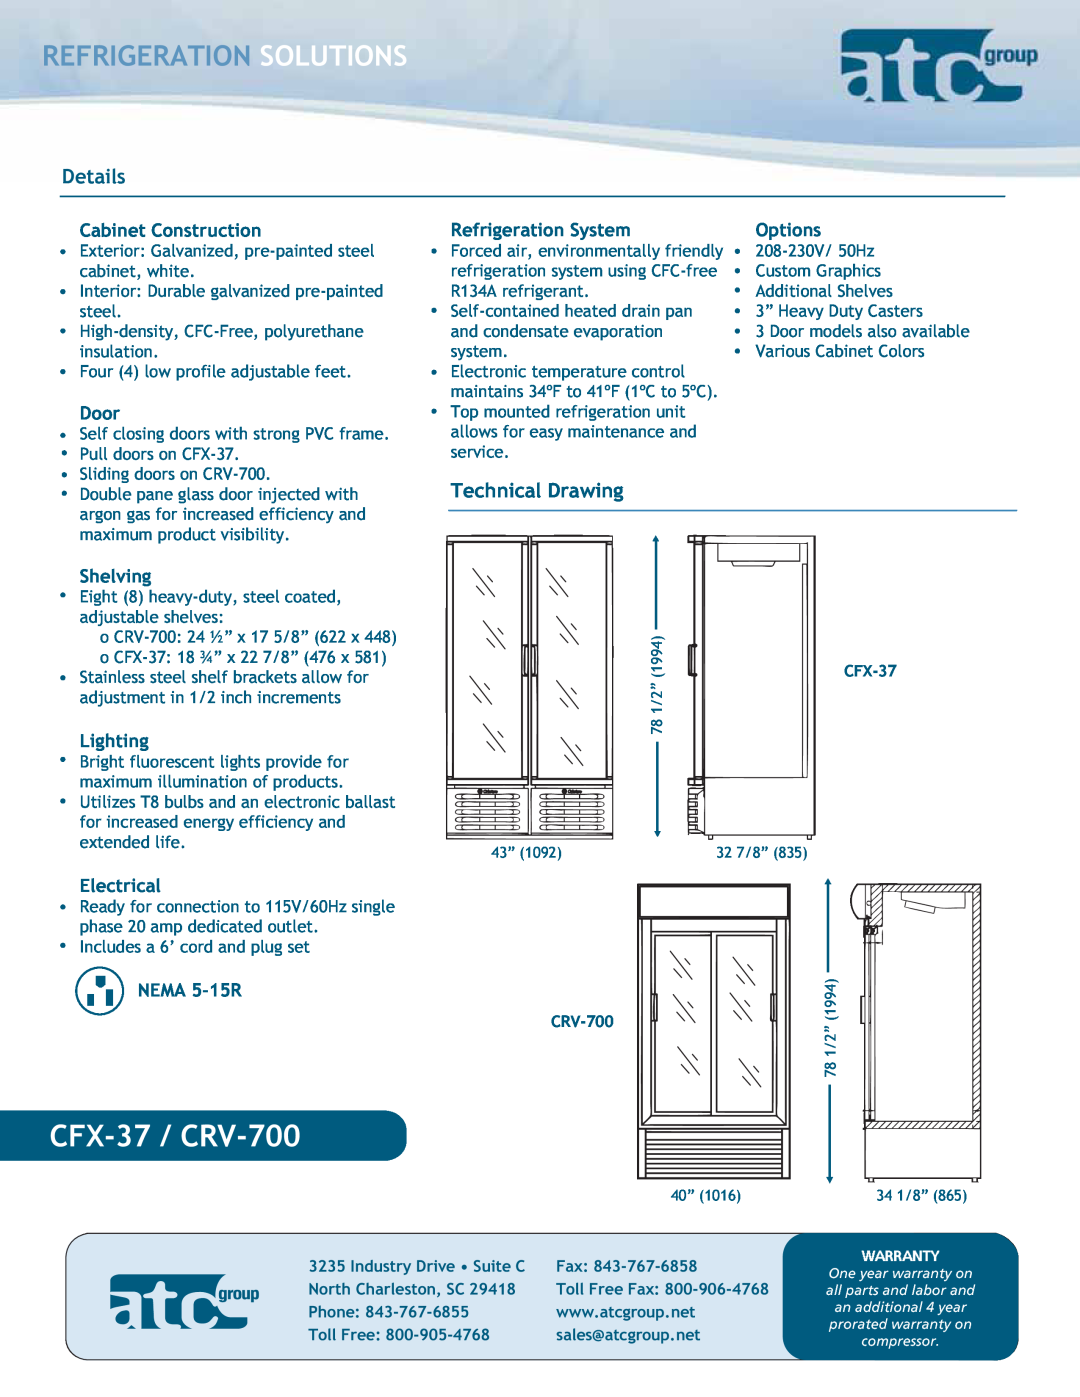 ATC Group CRV 700 CFX-37 / CRV-700, Refrigeration Solutions, Details, Technical Drawing, Cabinet Construction, Door 